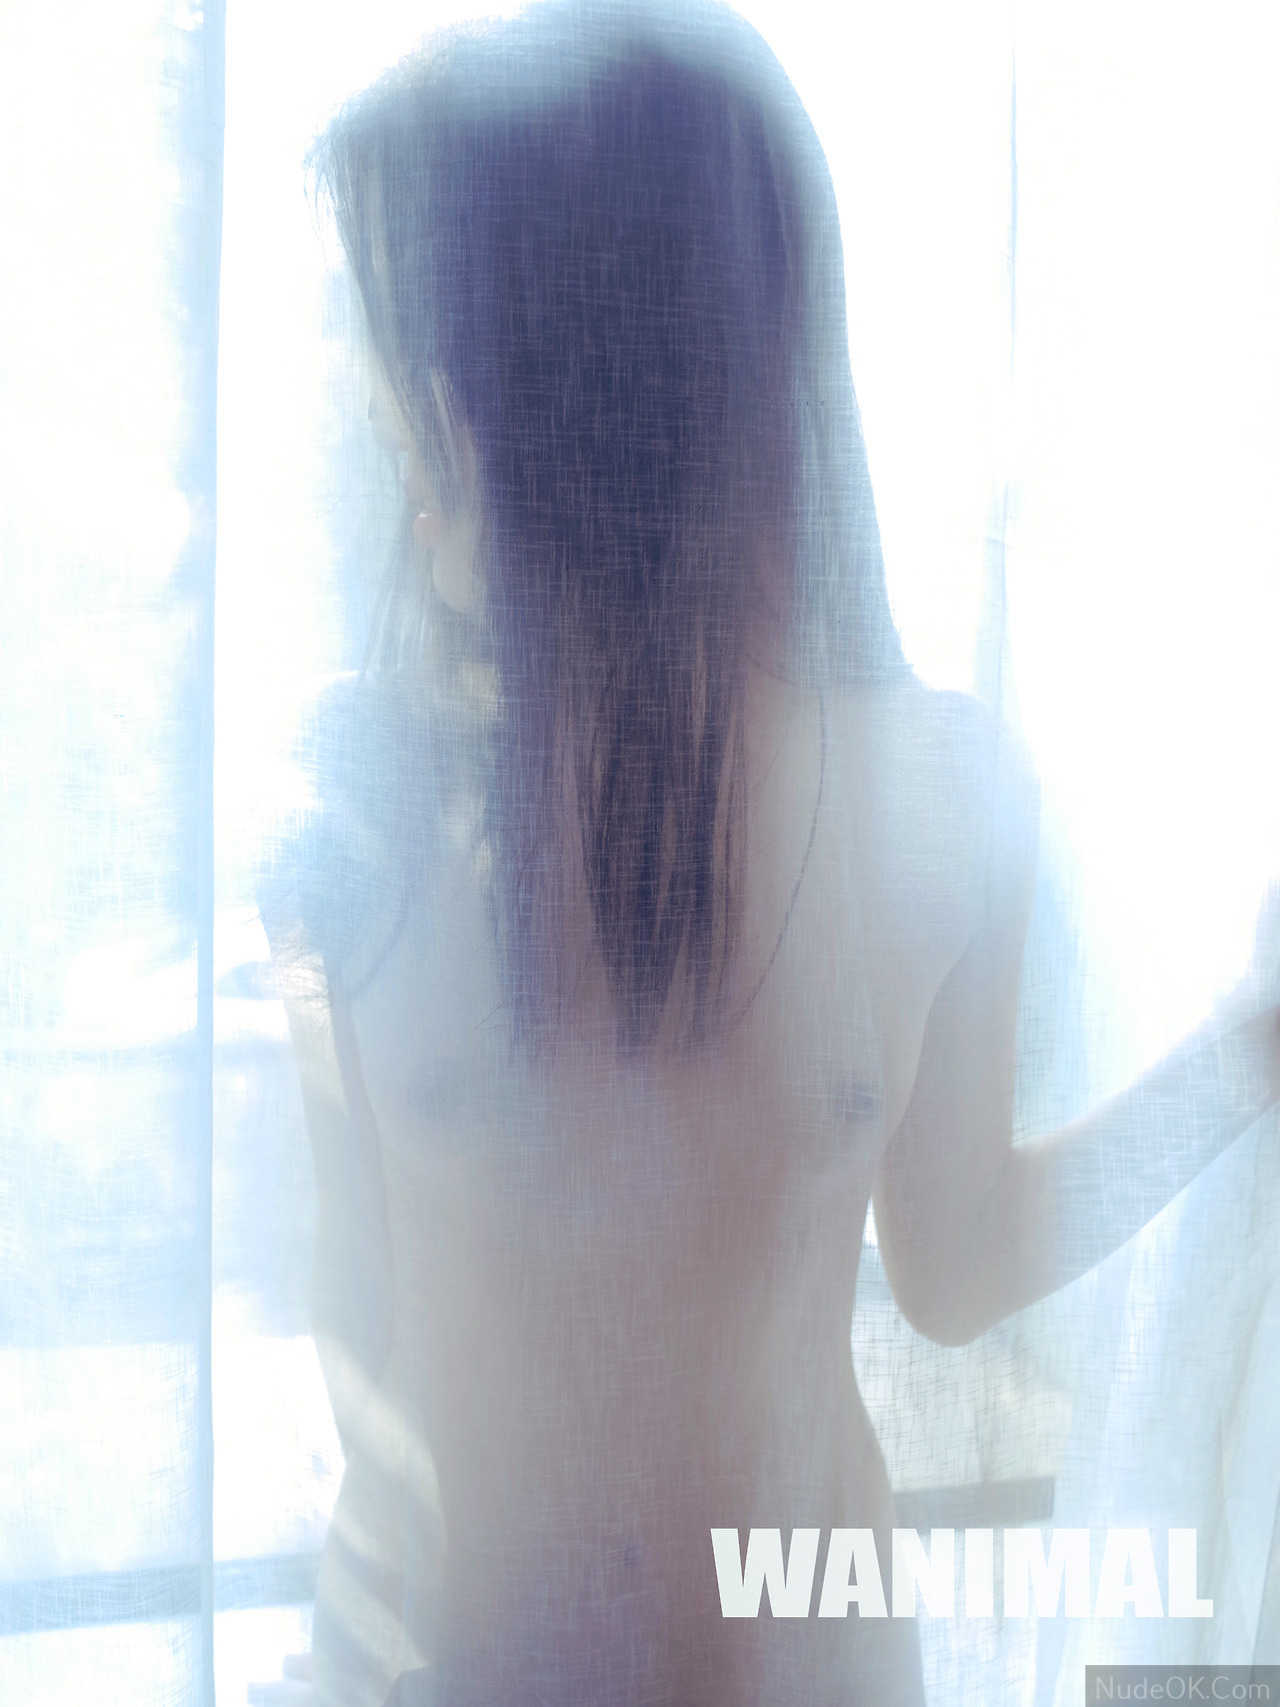  NudeOK.Com - Fotos desnudas de modelos chinos - Wanimal desnuda - erótica; NudeOK.Com Wanimal Photo Album; Model China; Girl Chinese; Nude Pictures; Naked Sexy;  